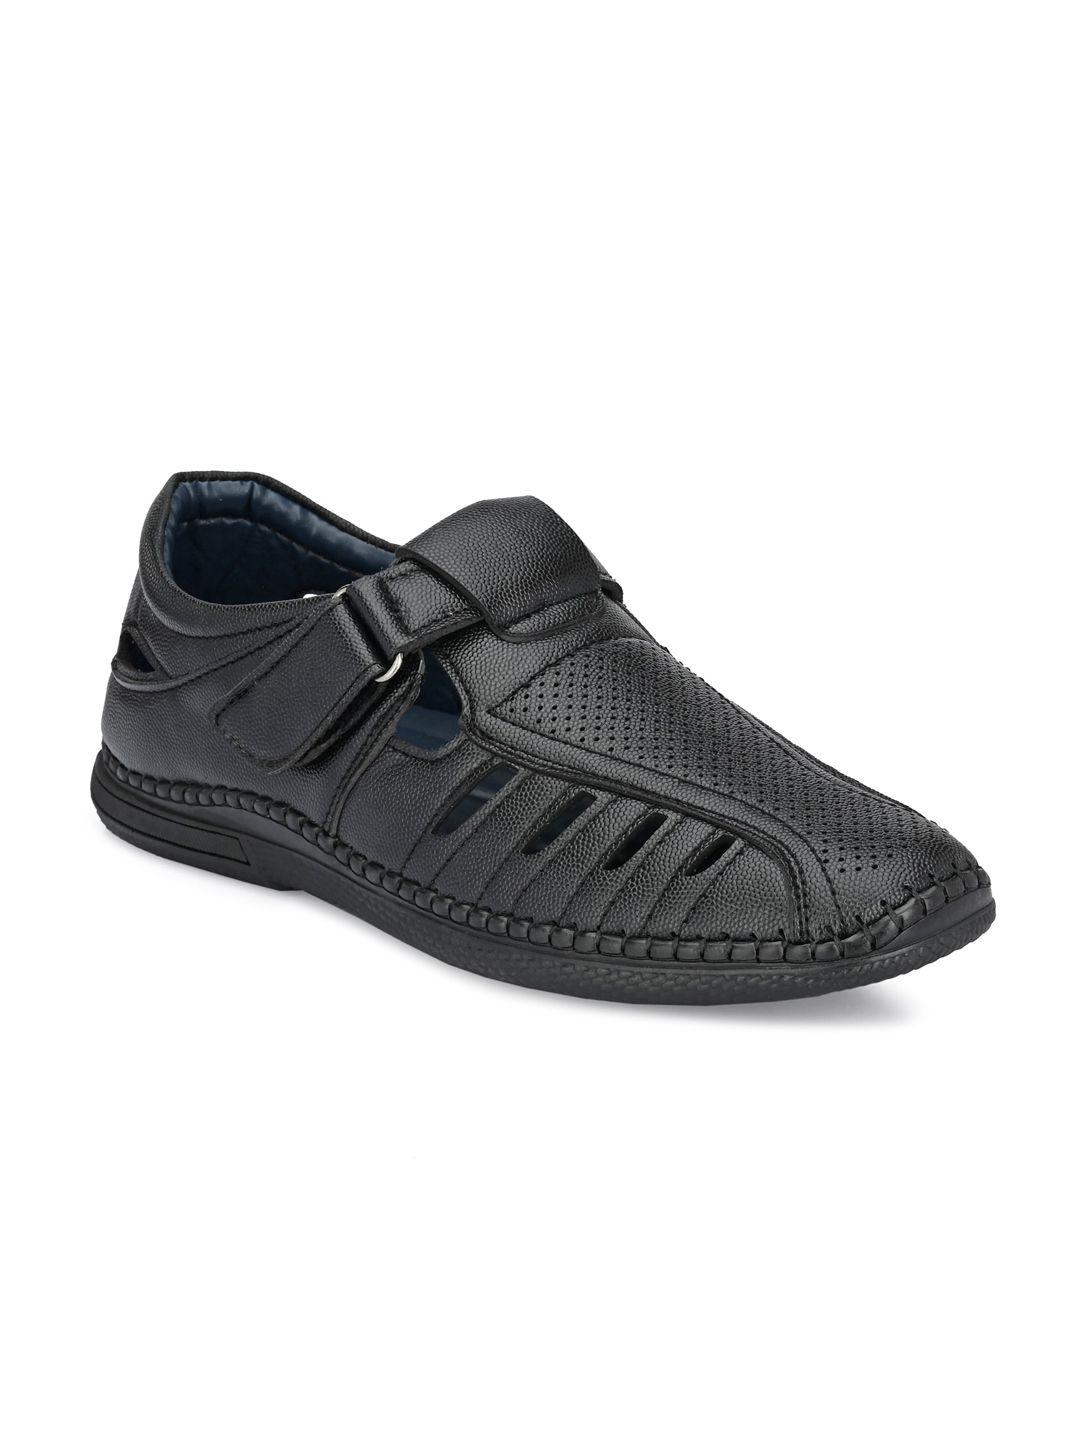 the roadster lifestyle co men black shoe-style sandals